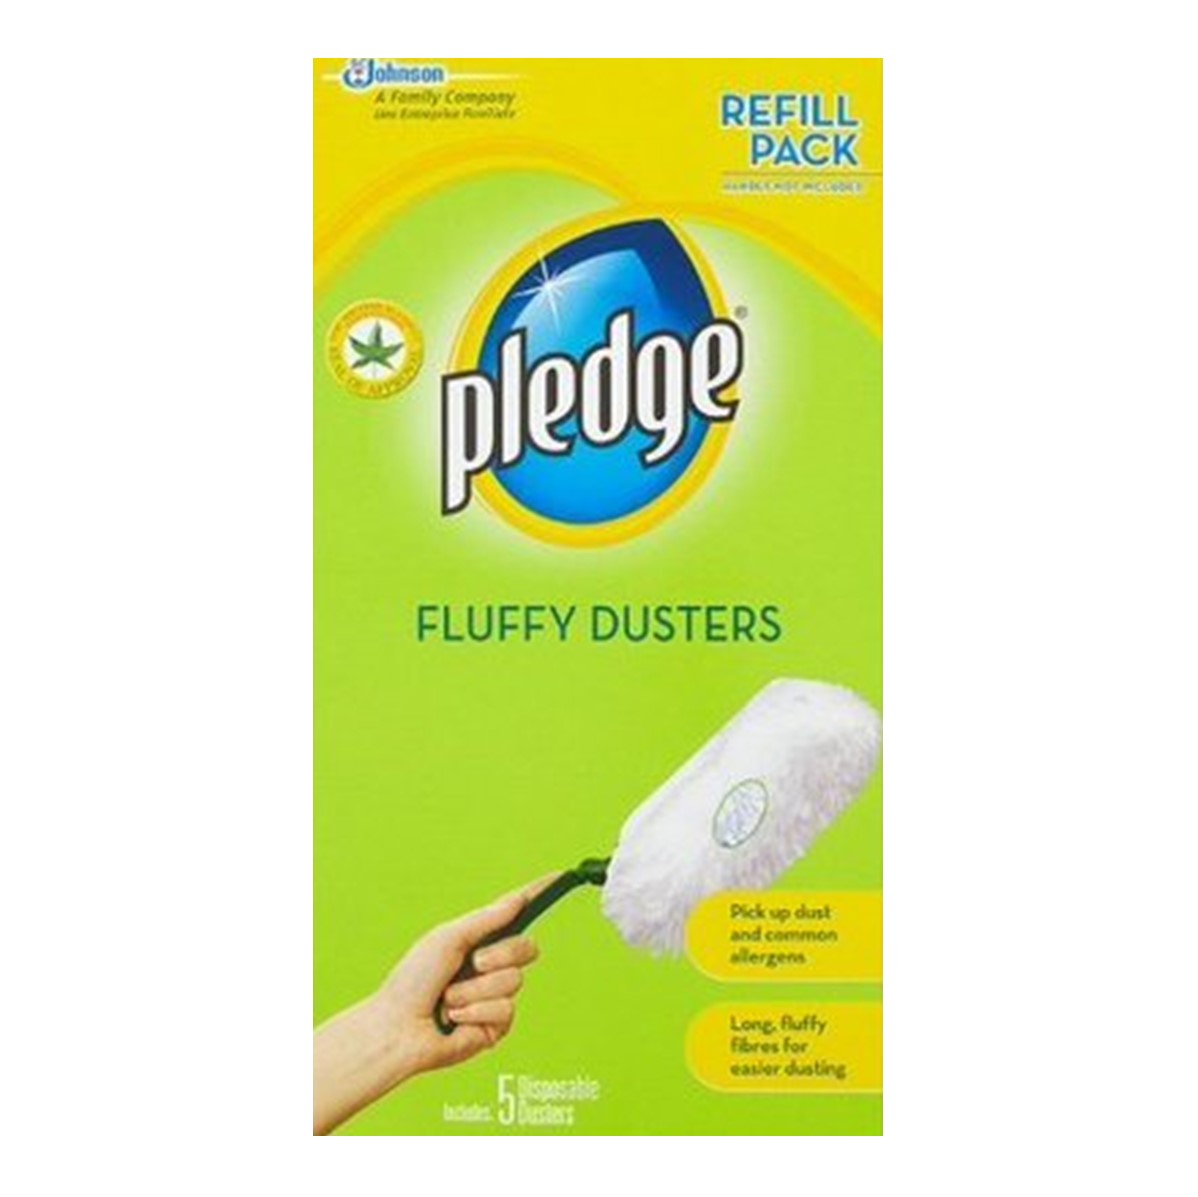 Pledge Fluffy Duster Refills - 5 dusters